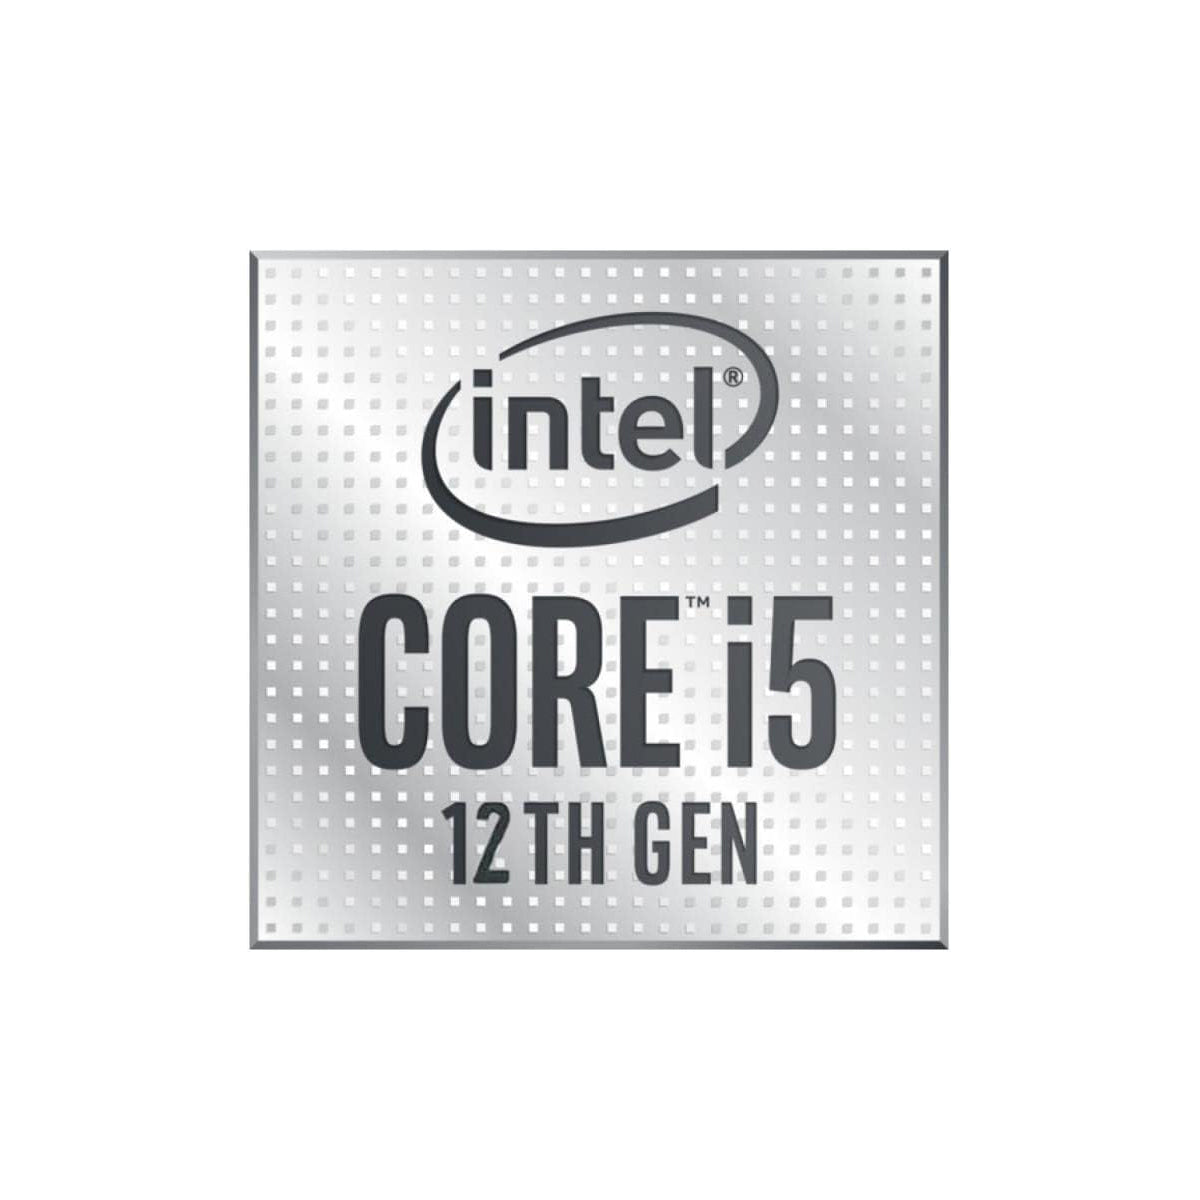 Intel Core i5-12400, 12th Gen Processor